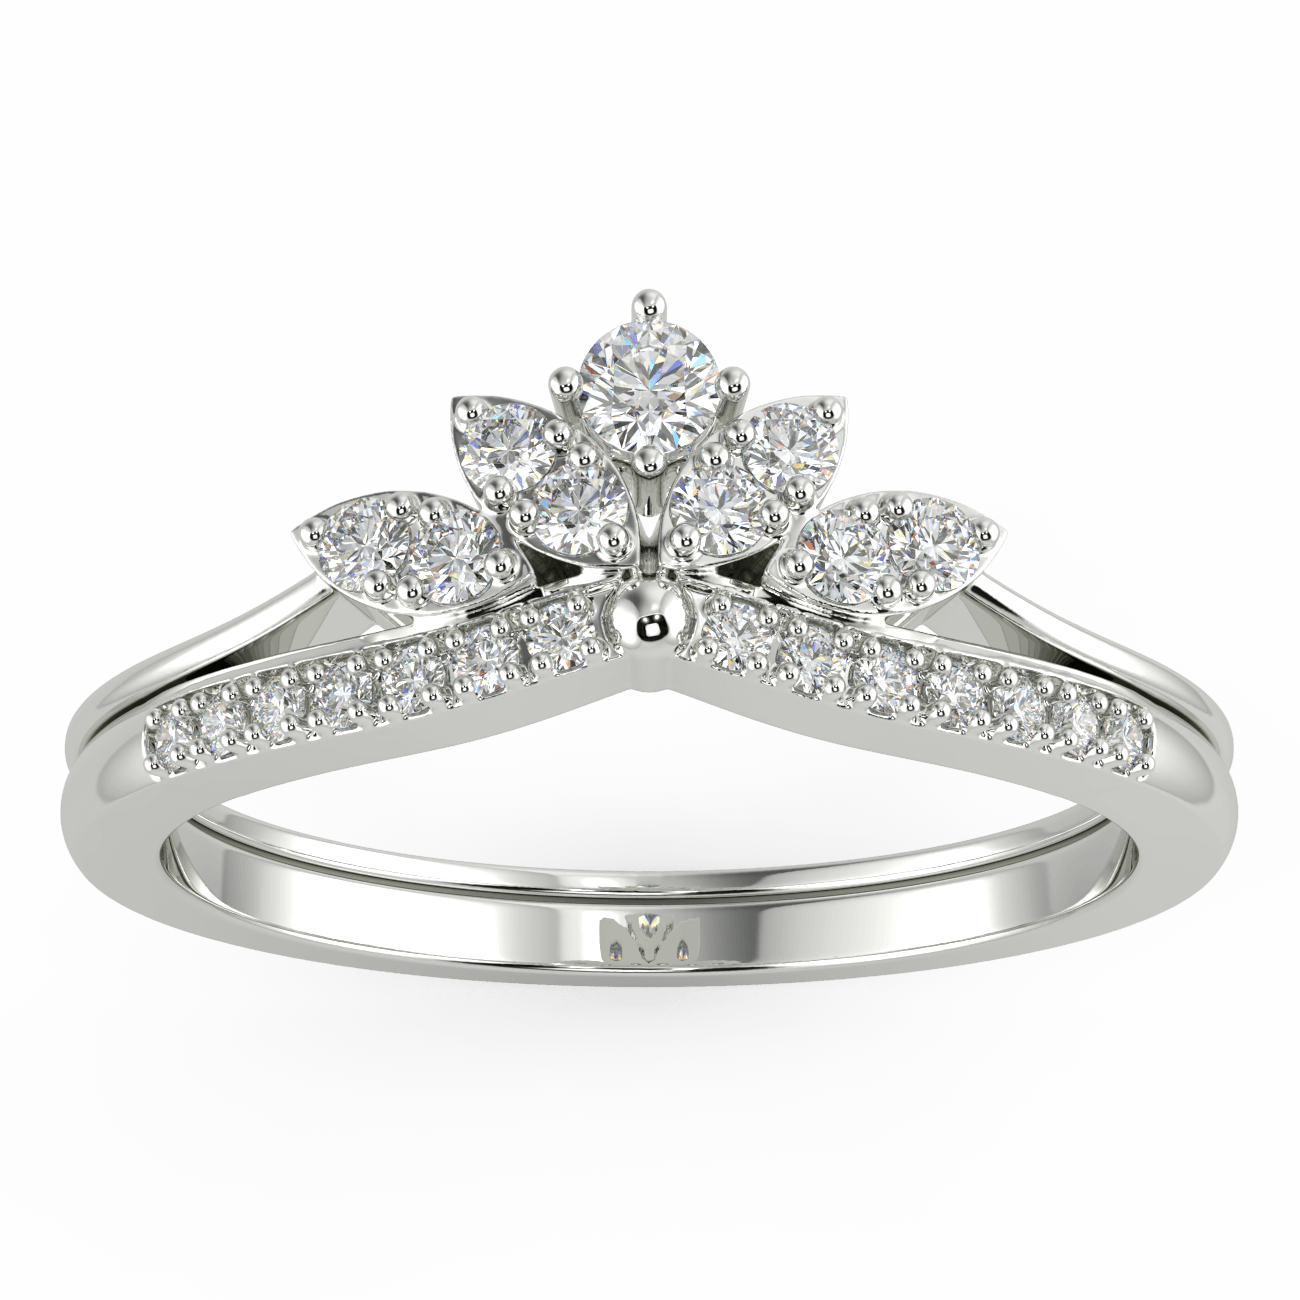 Tiara Diamond Wedding Ring from Australian Diamond Network